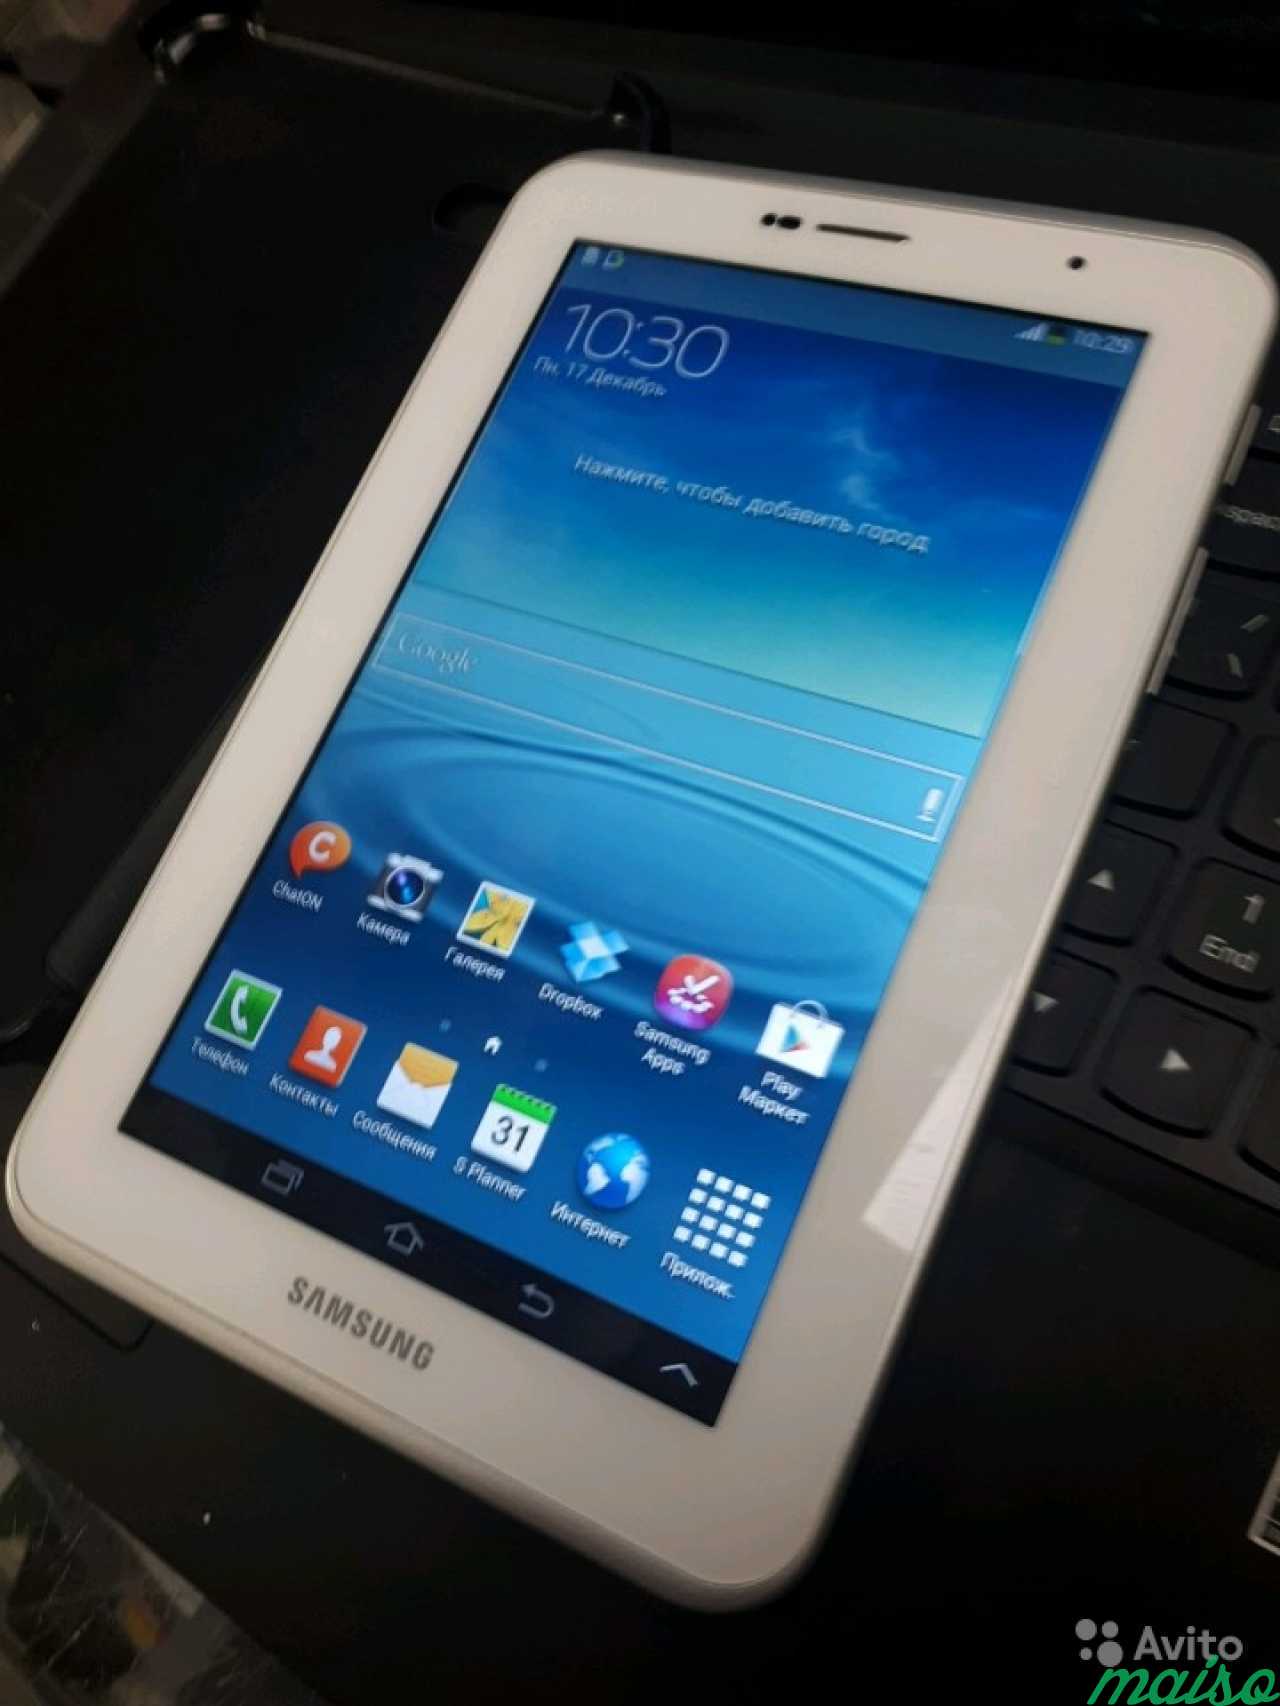 Авито планшеты б у. Планшет самсунг gt-p3100. Samsung Galaxy Tab 2 7. Самсунг планшет таб 3100. Samsung Galaxy Tab 2 7.0 gt-p3100.